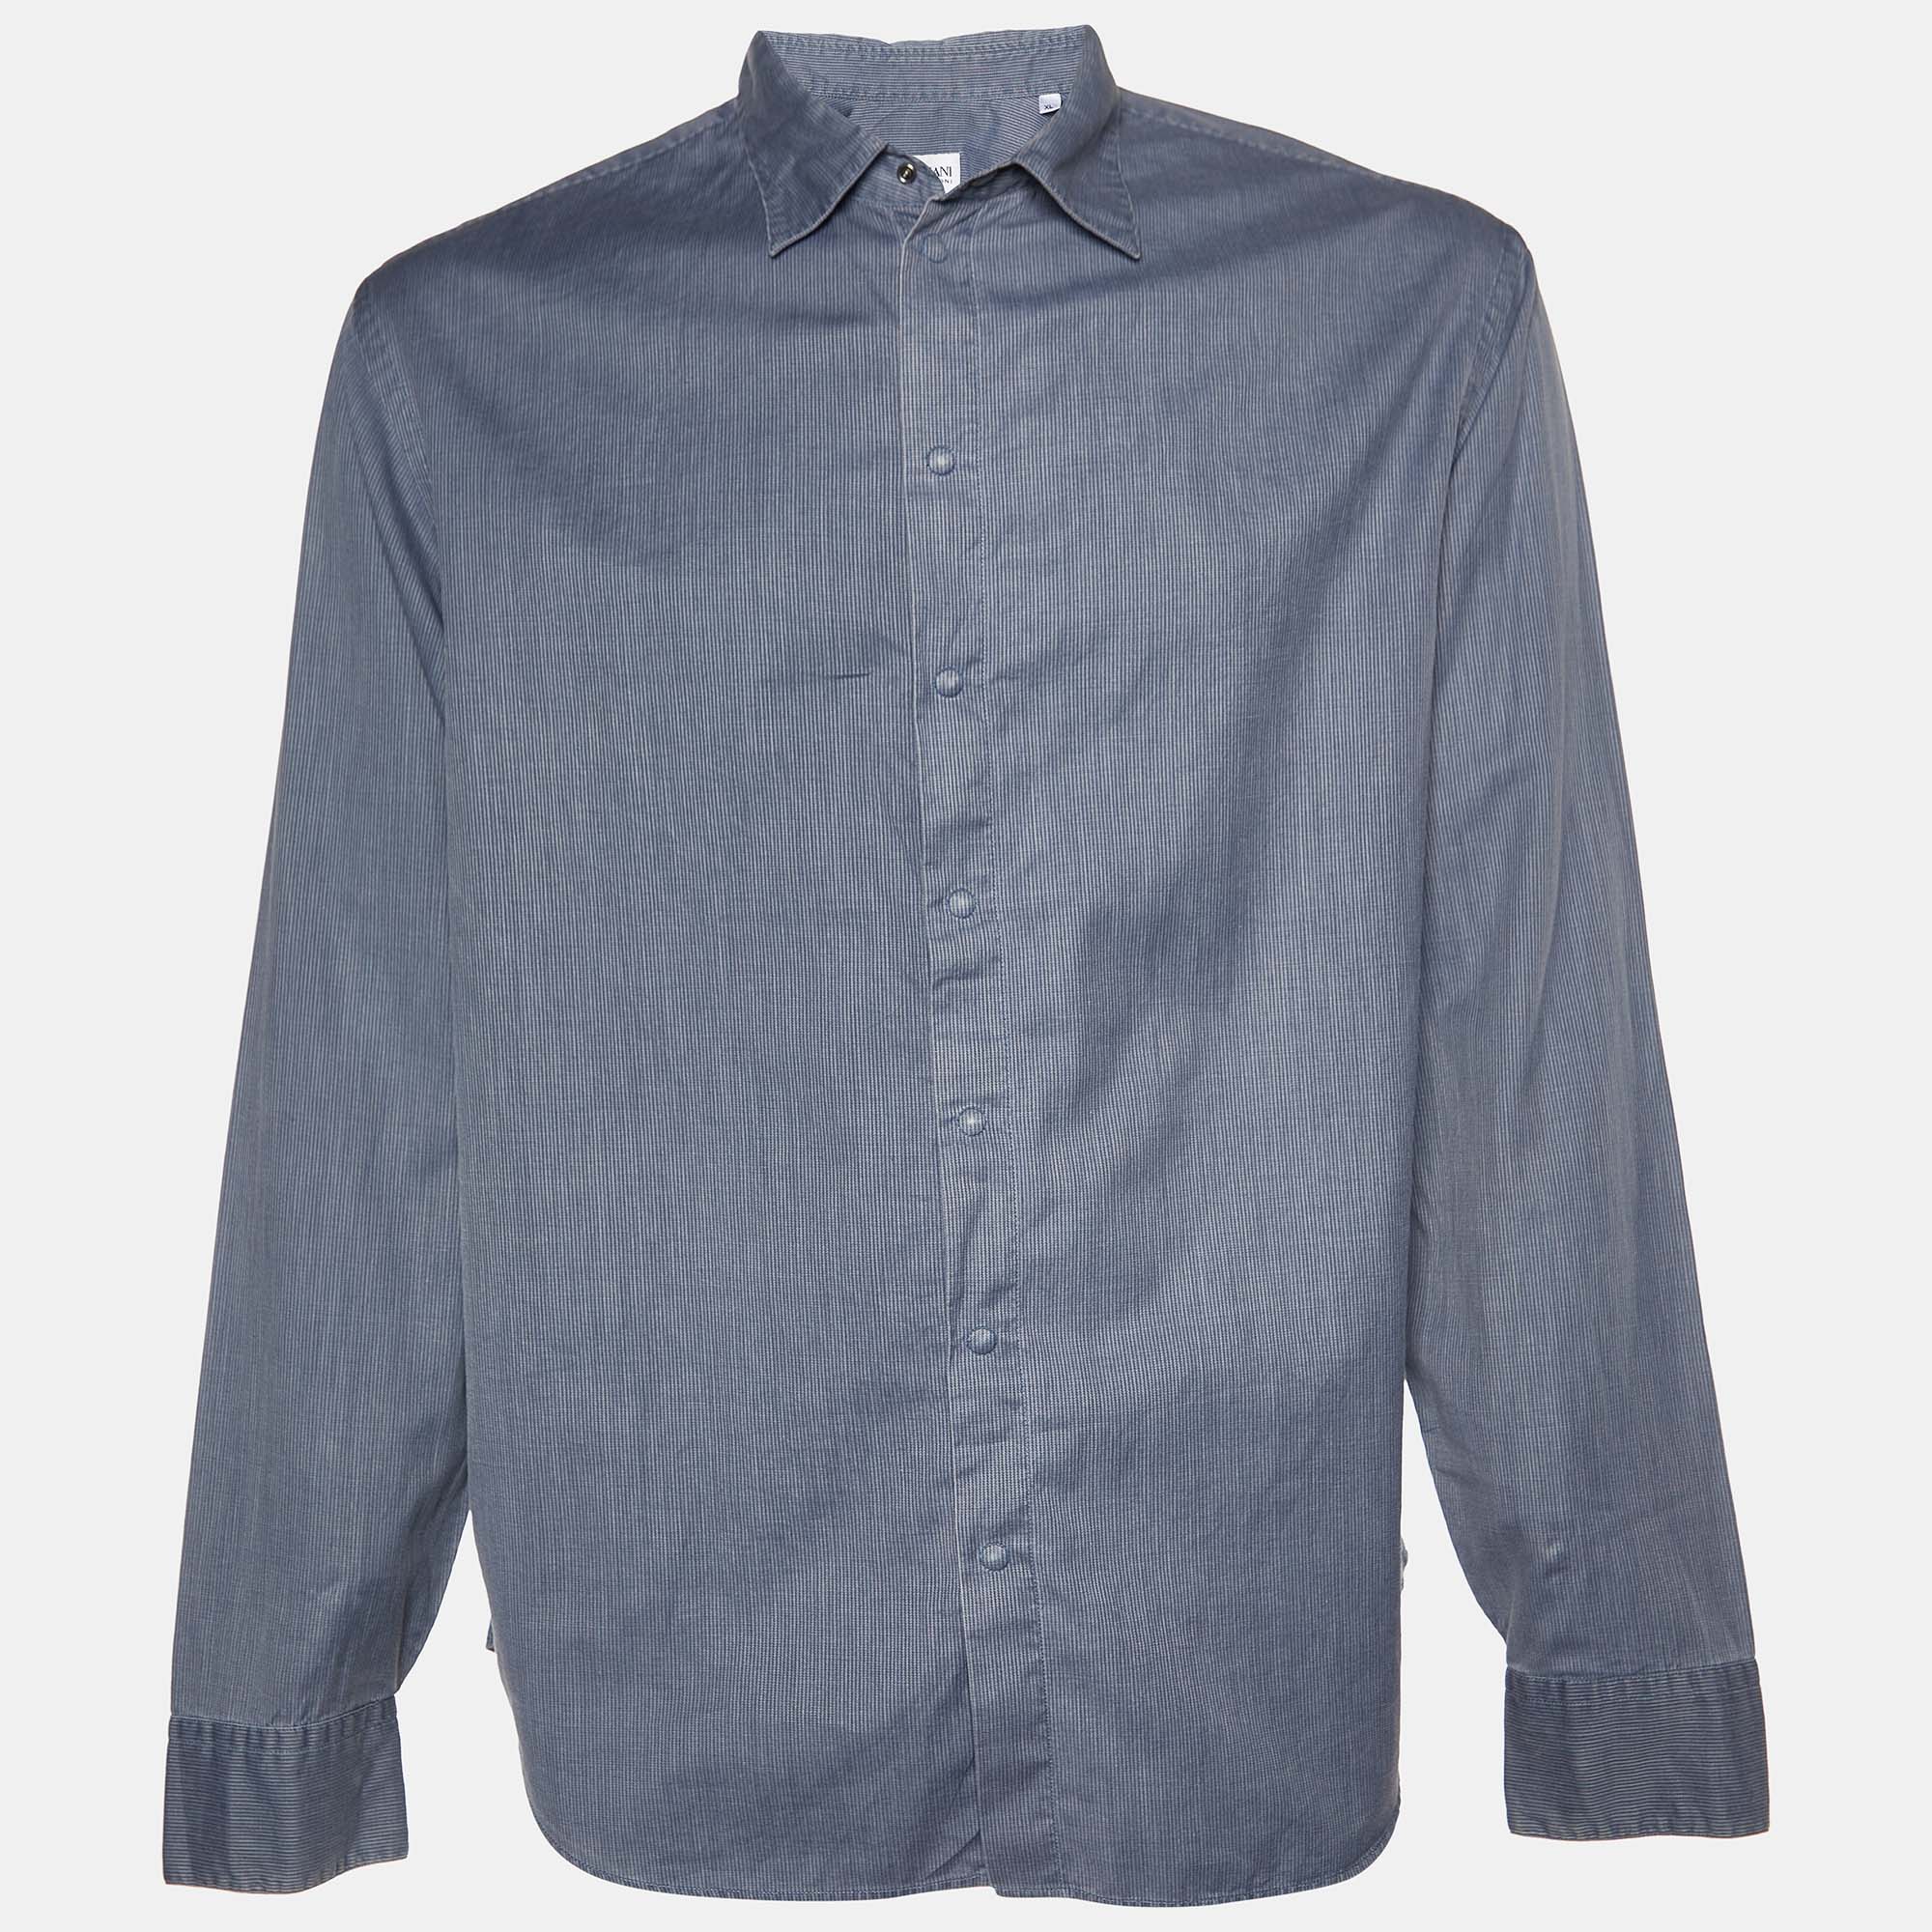 Armani collezioni blue striped cotton long sleeve shirt xl